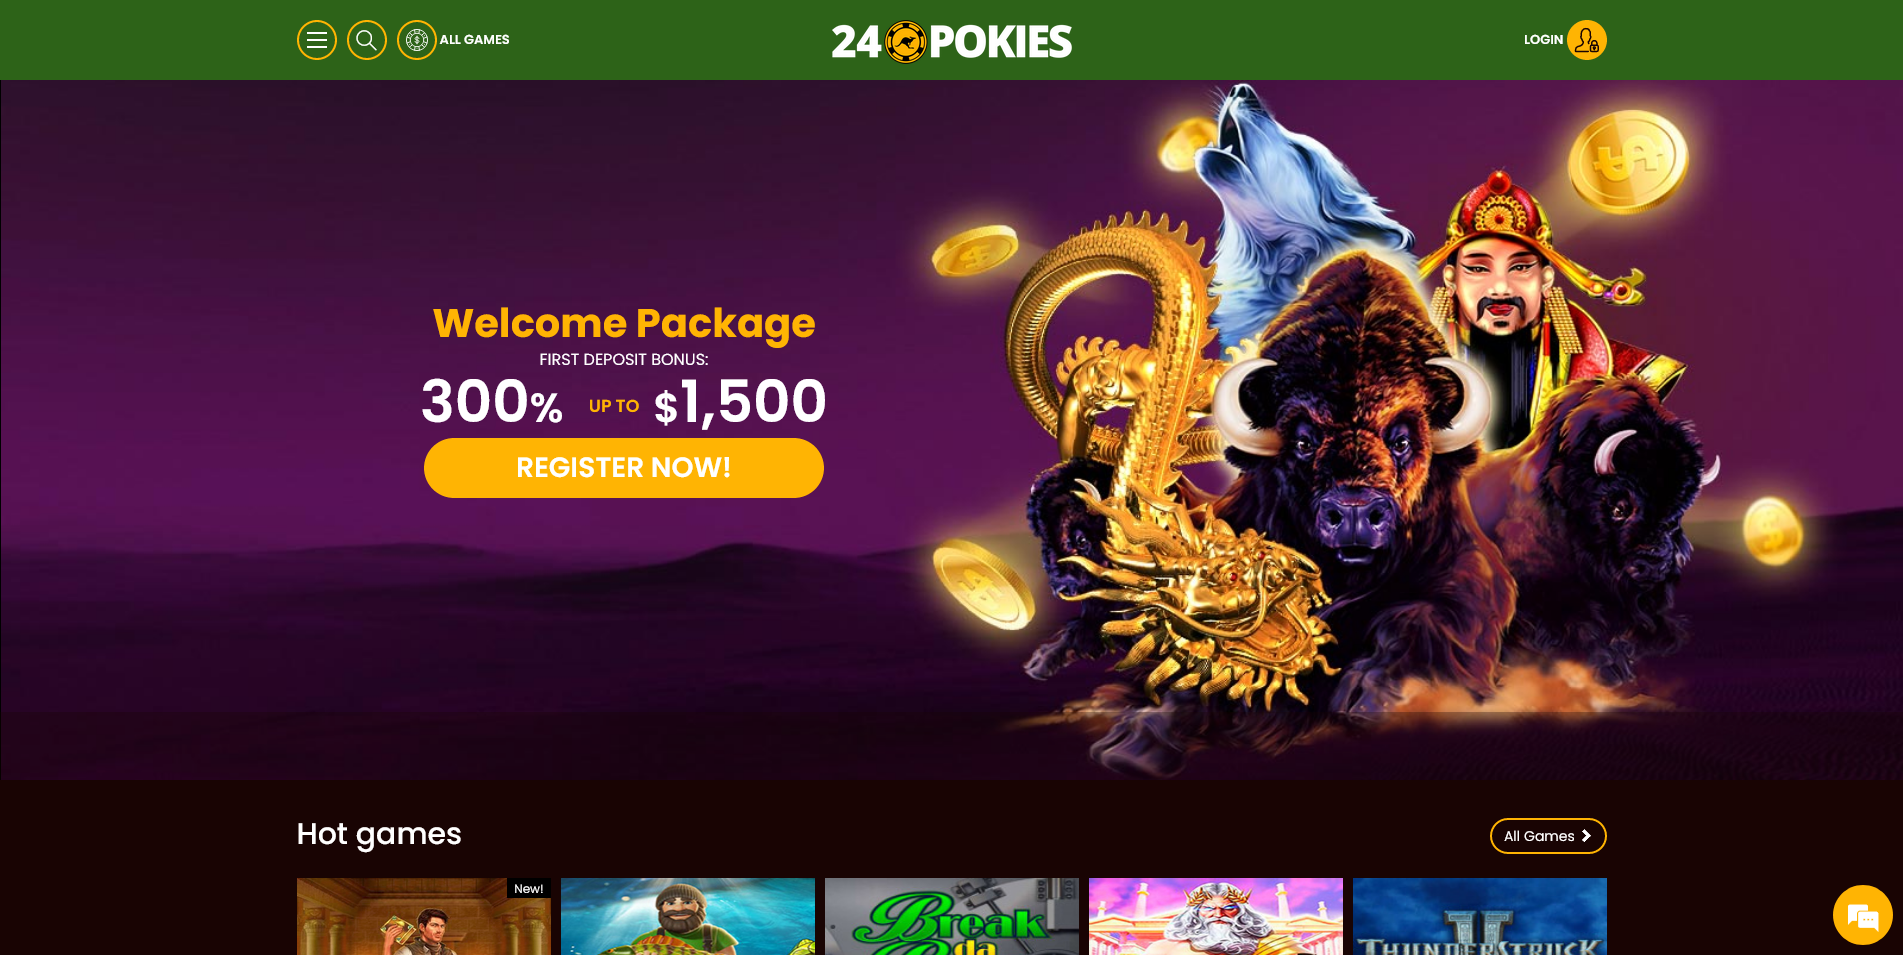 Screenshot of main Page on 24 Pokies Casino site